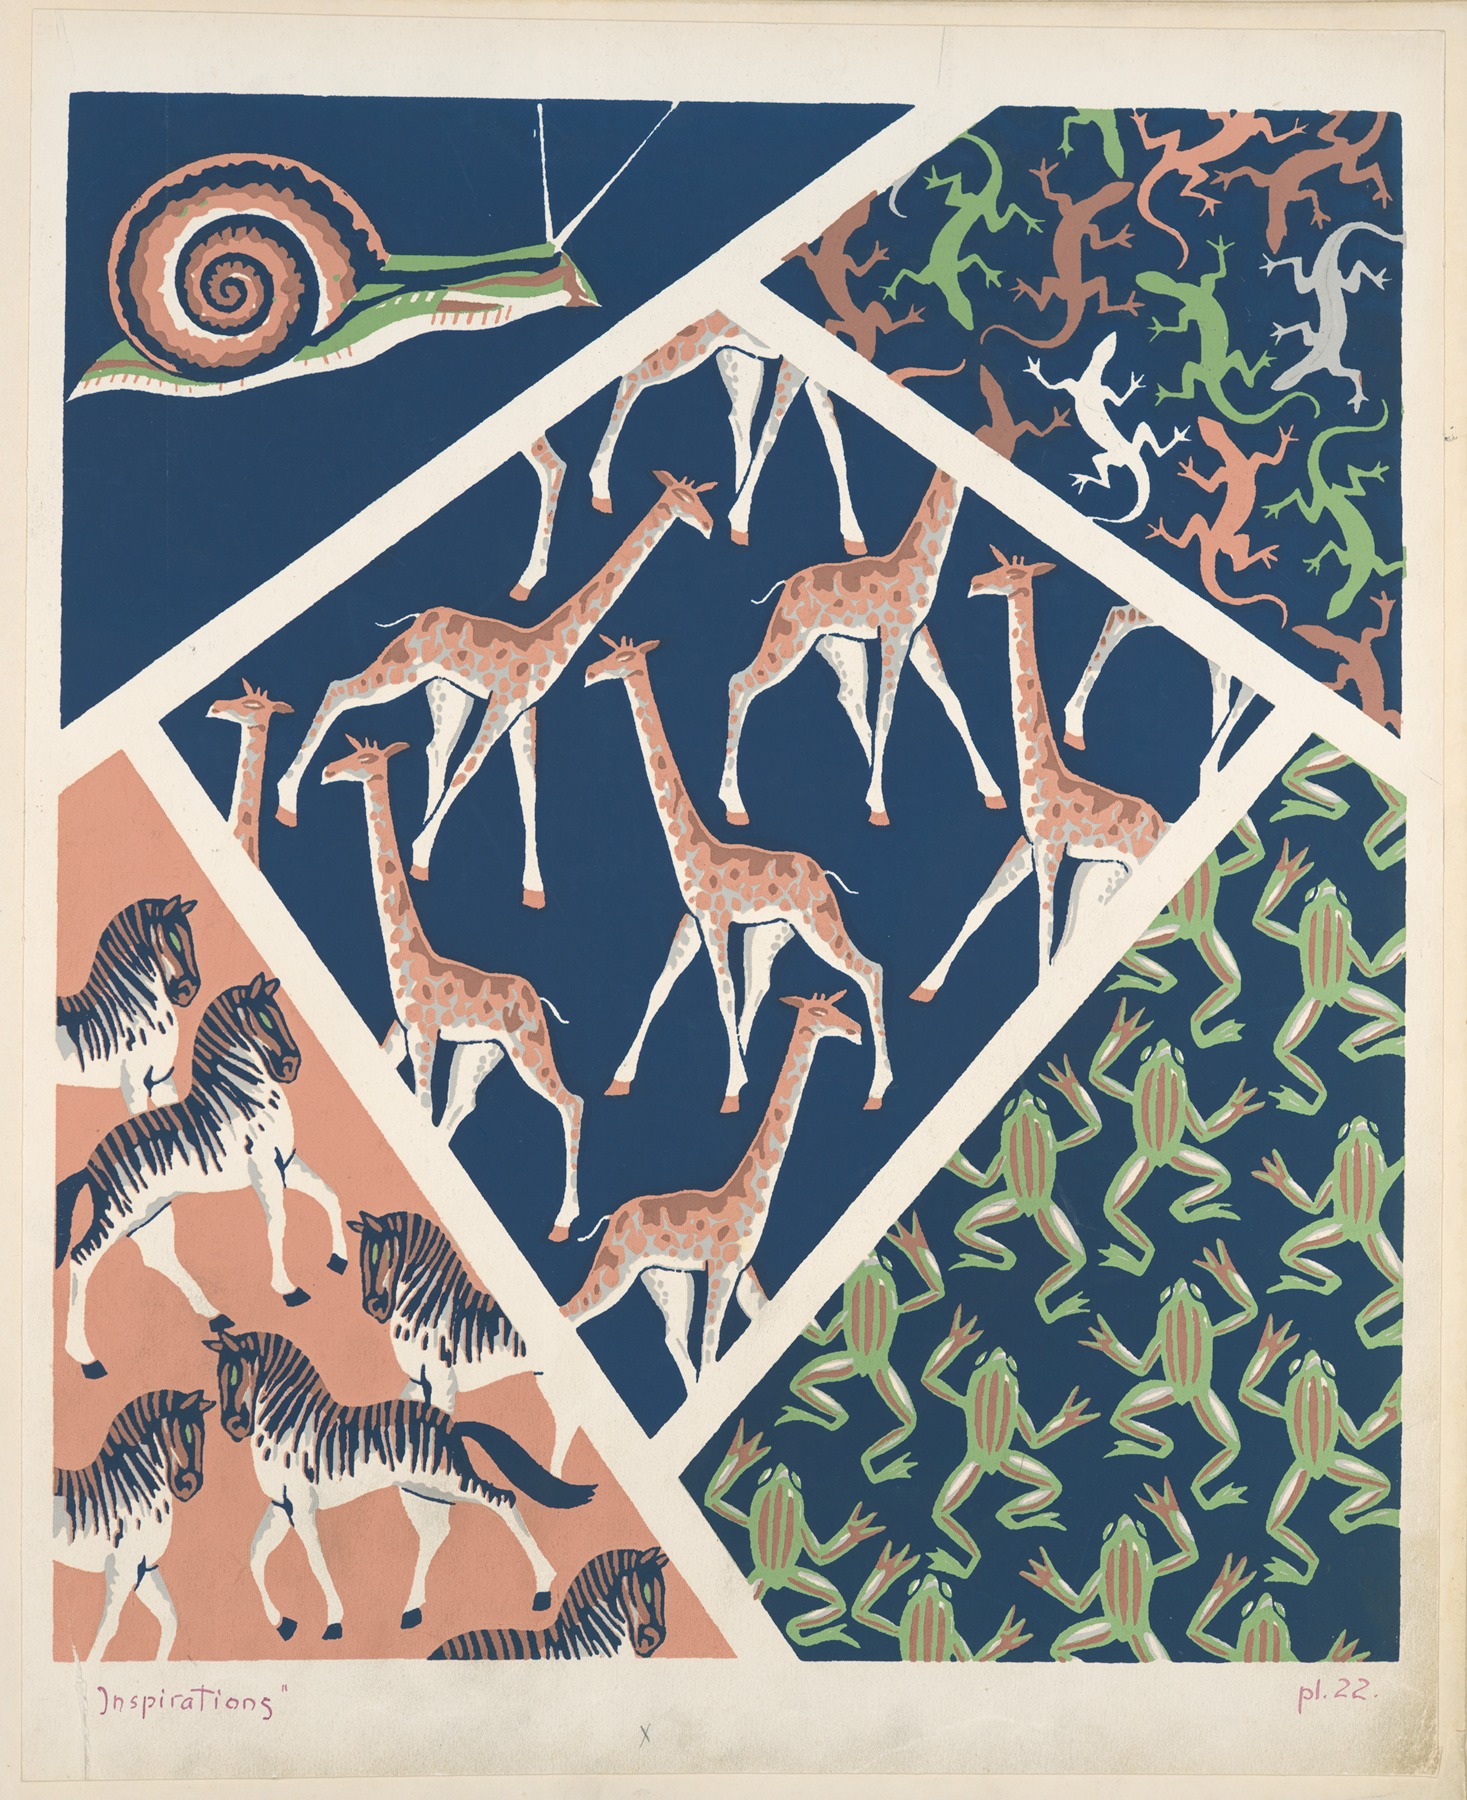 André Durenceau - Five animal form compositions ; snail, iguanas, giraffes, zebras, frogs